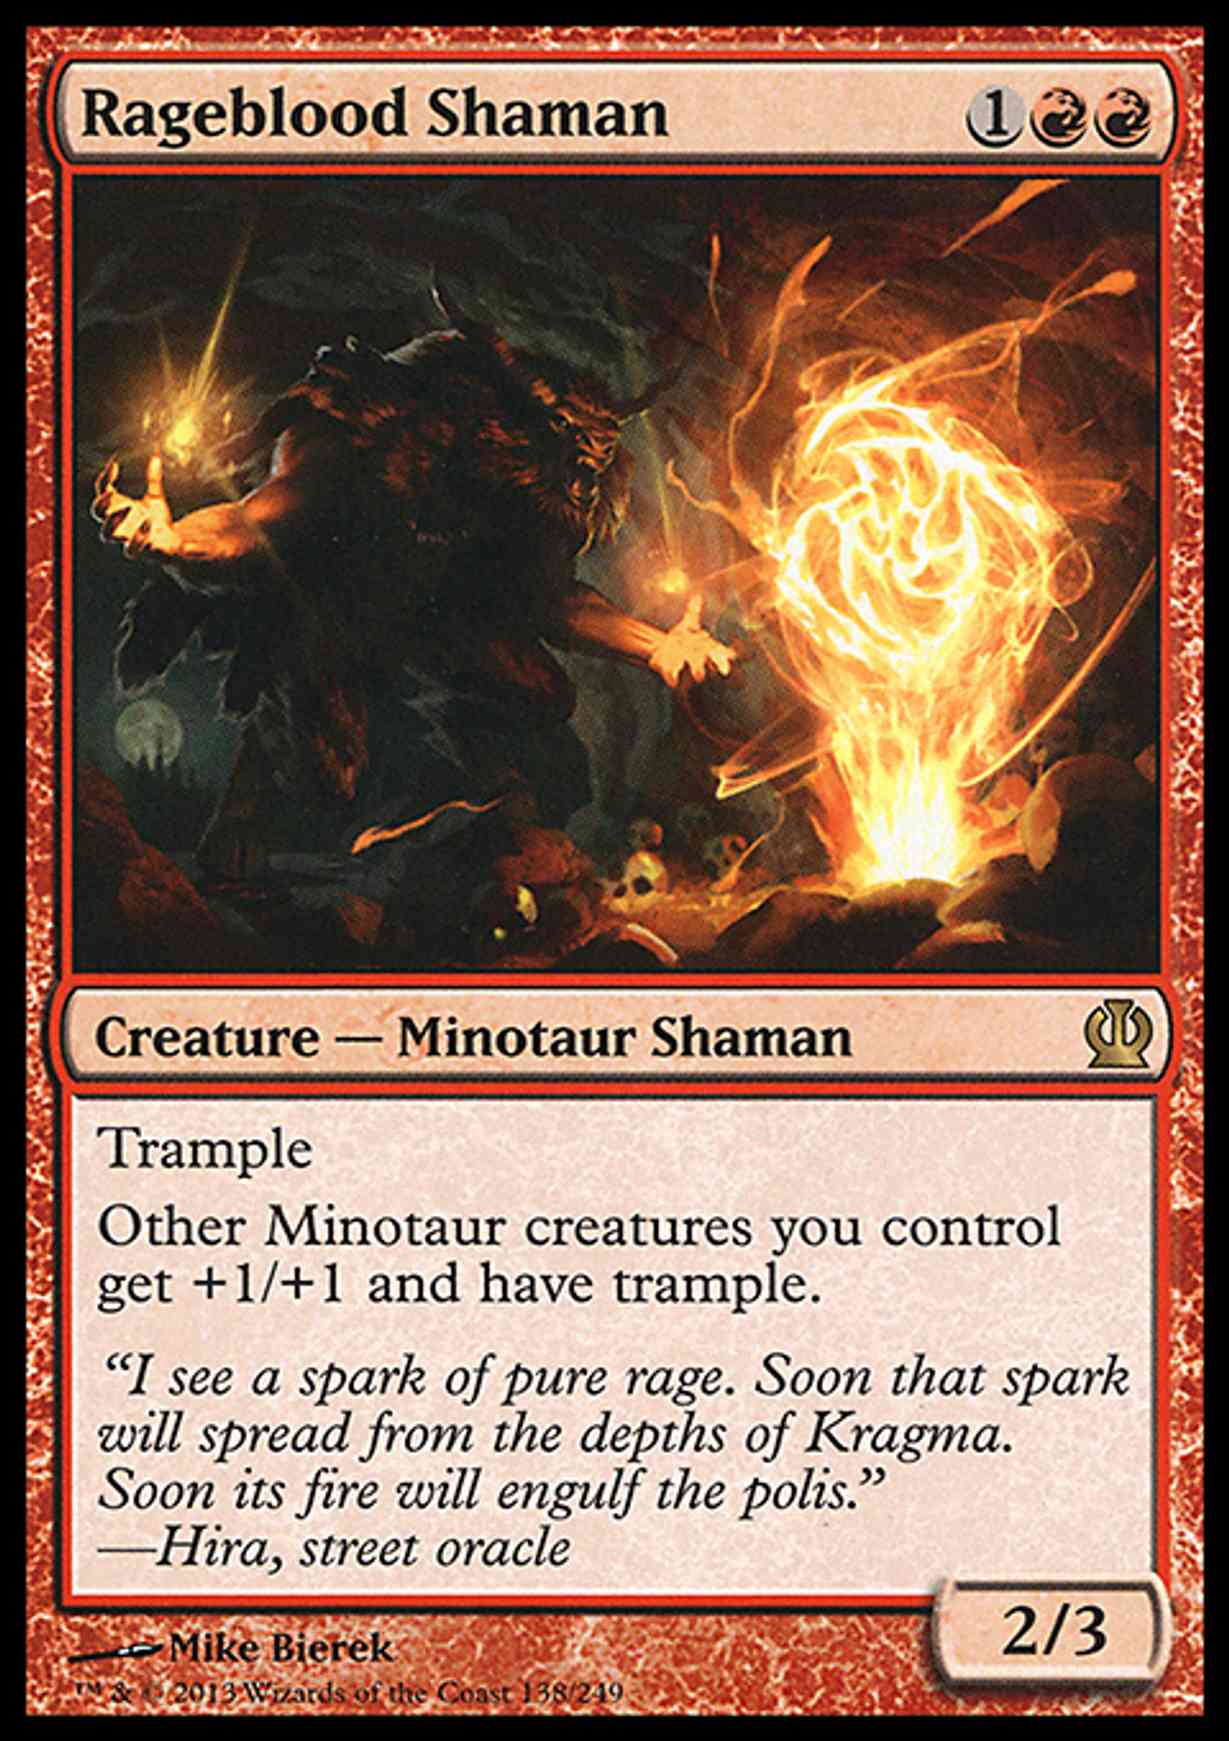 Rageblood Shaman magic card front